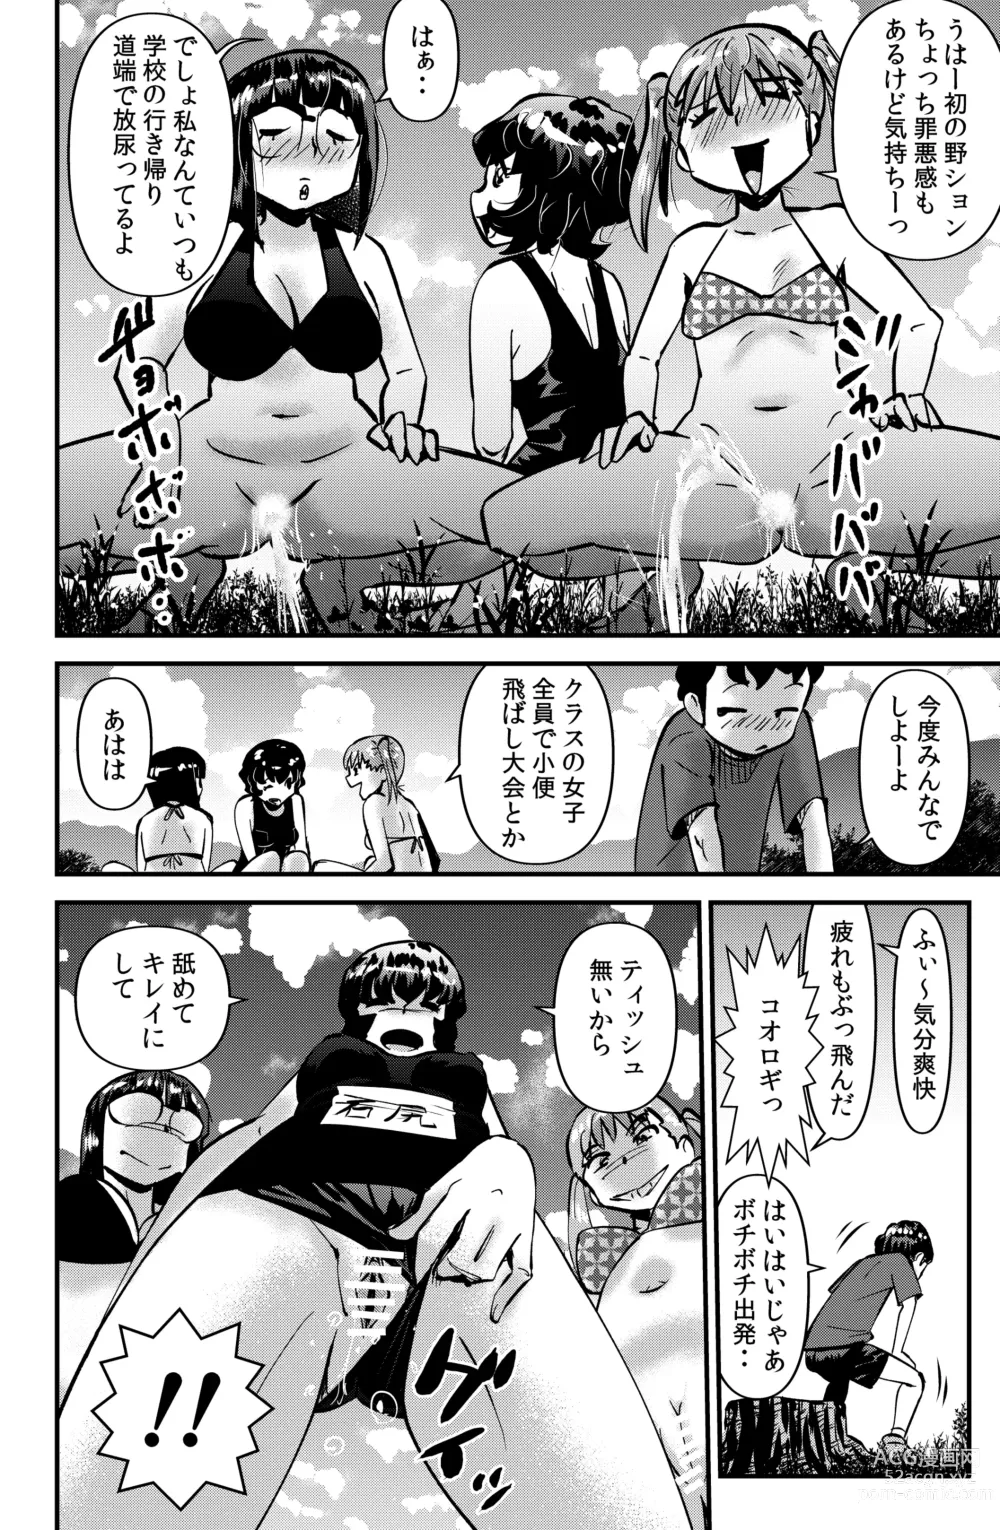 Page 4 of doujinshi Kazoku Camp 2